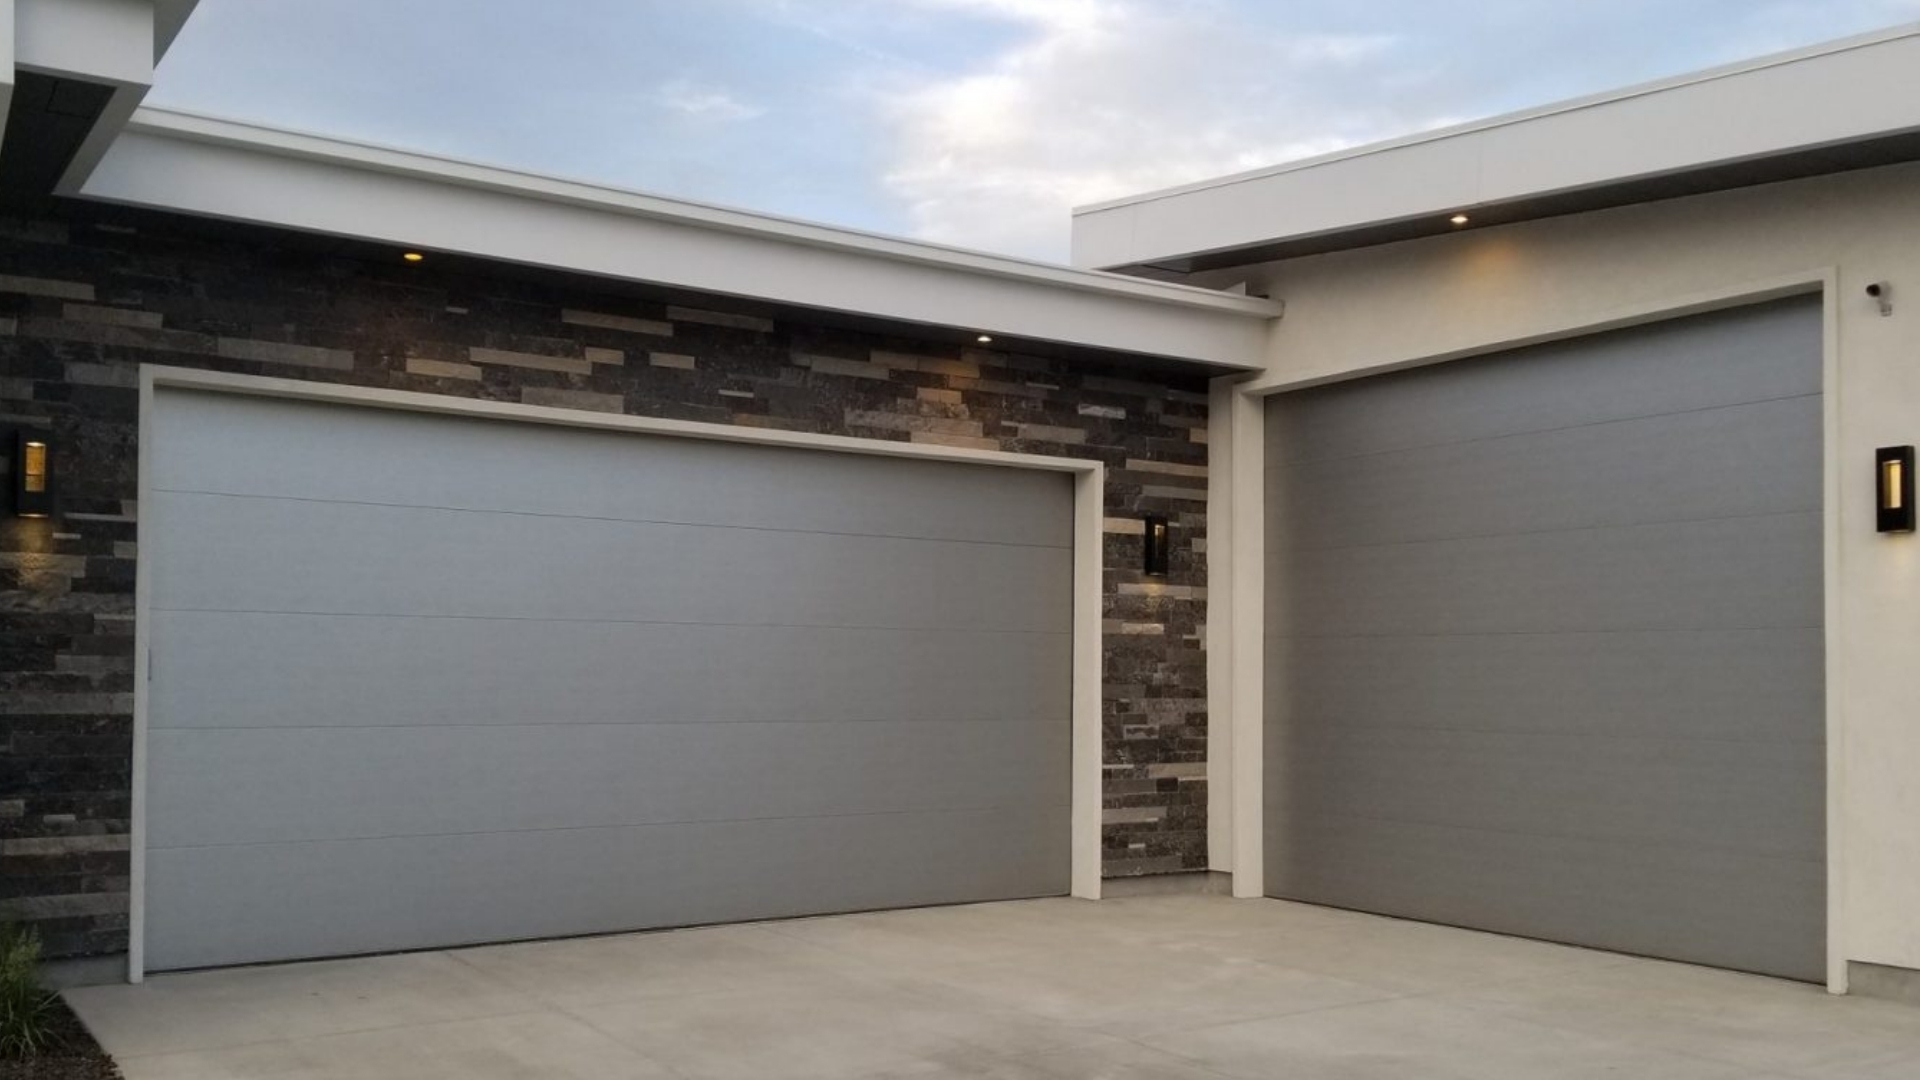 New-Garage-Doors-vs-Repair-What-Is-Best-for-Your-Home